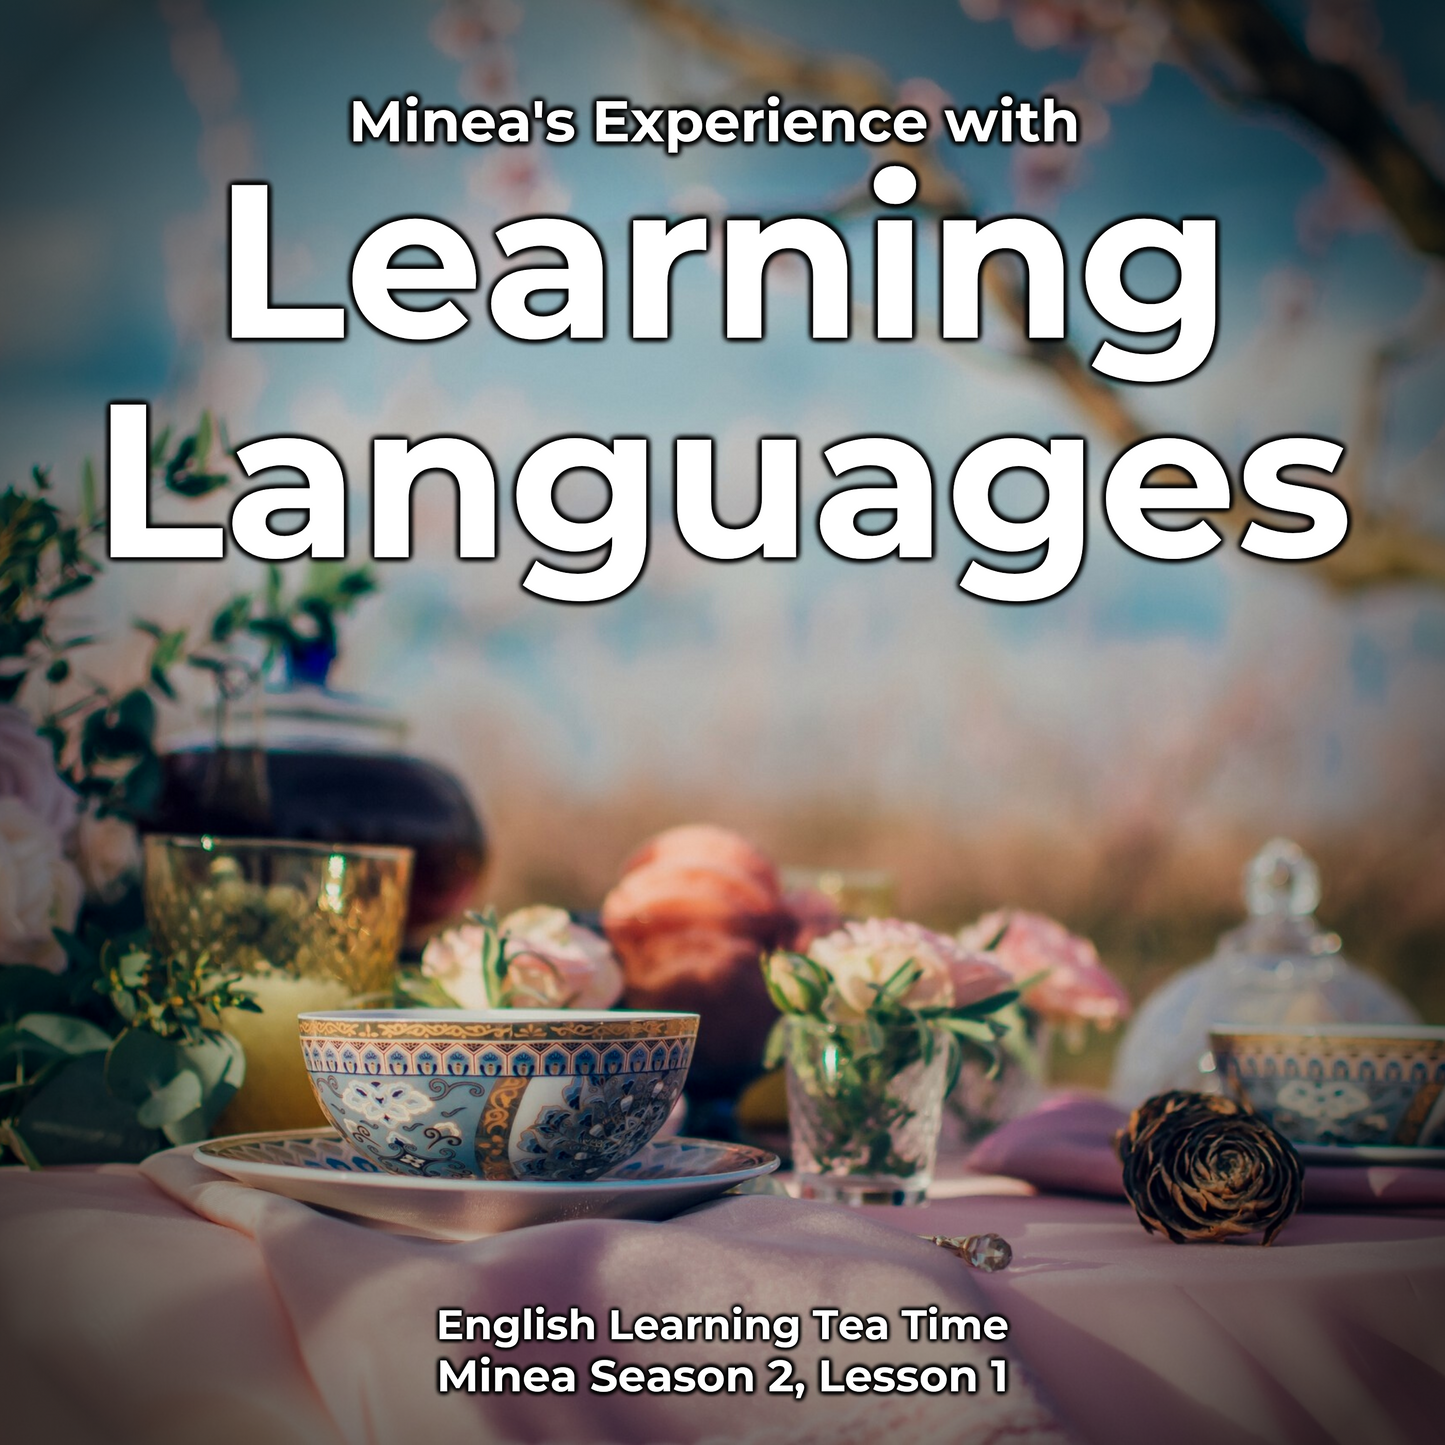 English Learning Tea Time: Minea's Experience with Learning Languages (Minea Season 2, Lesson 1)